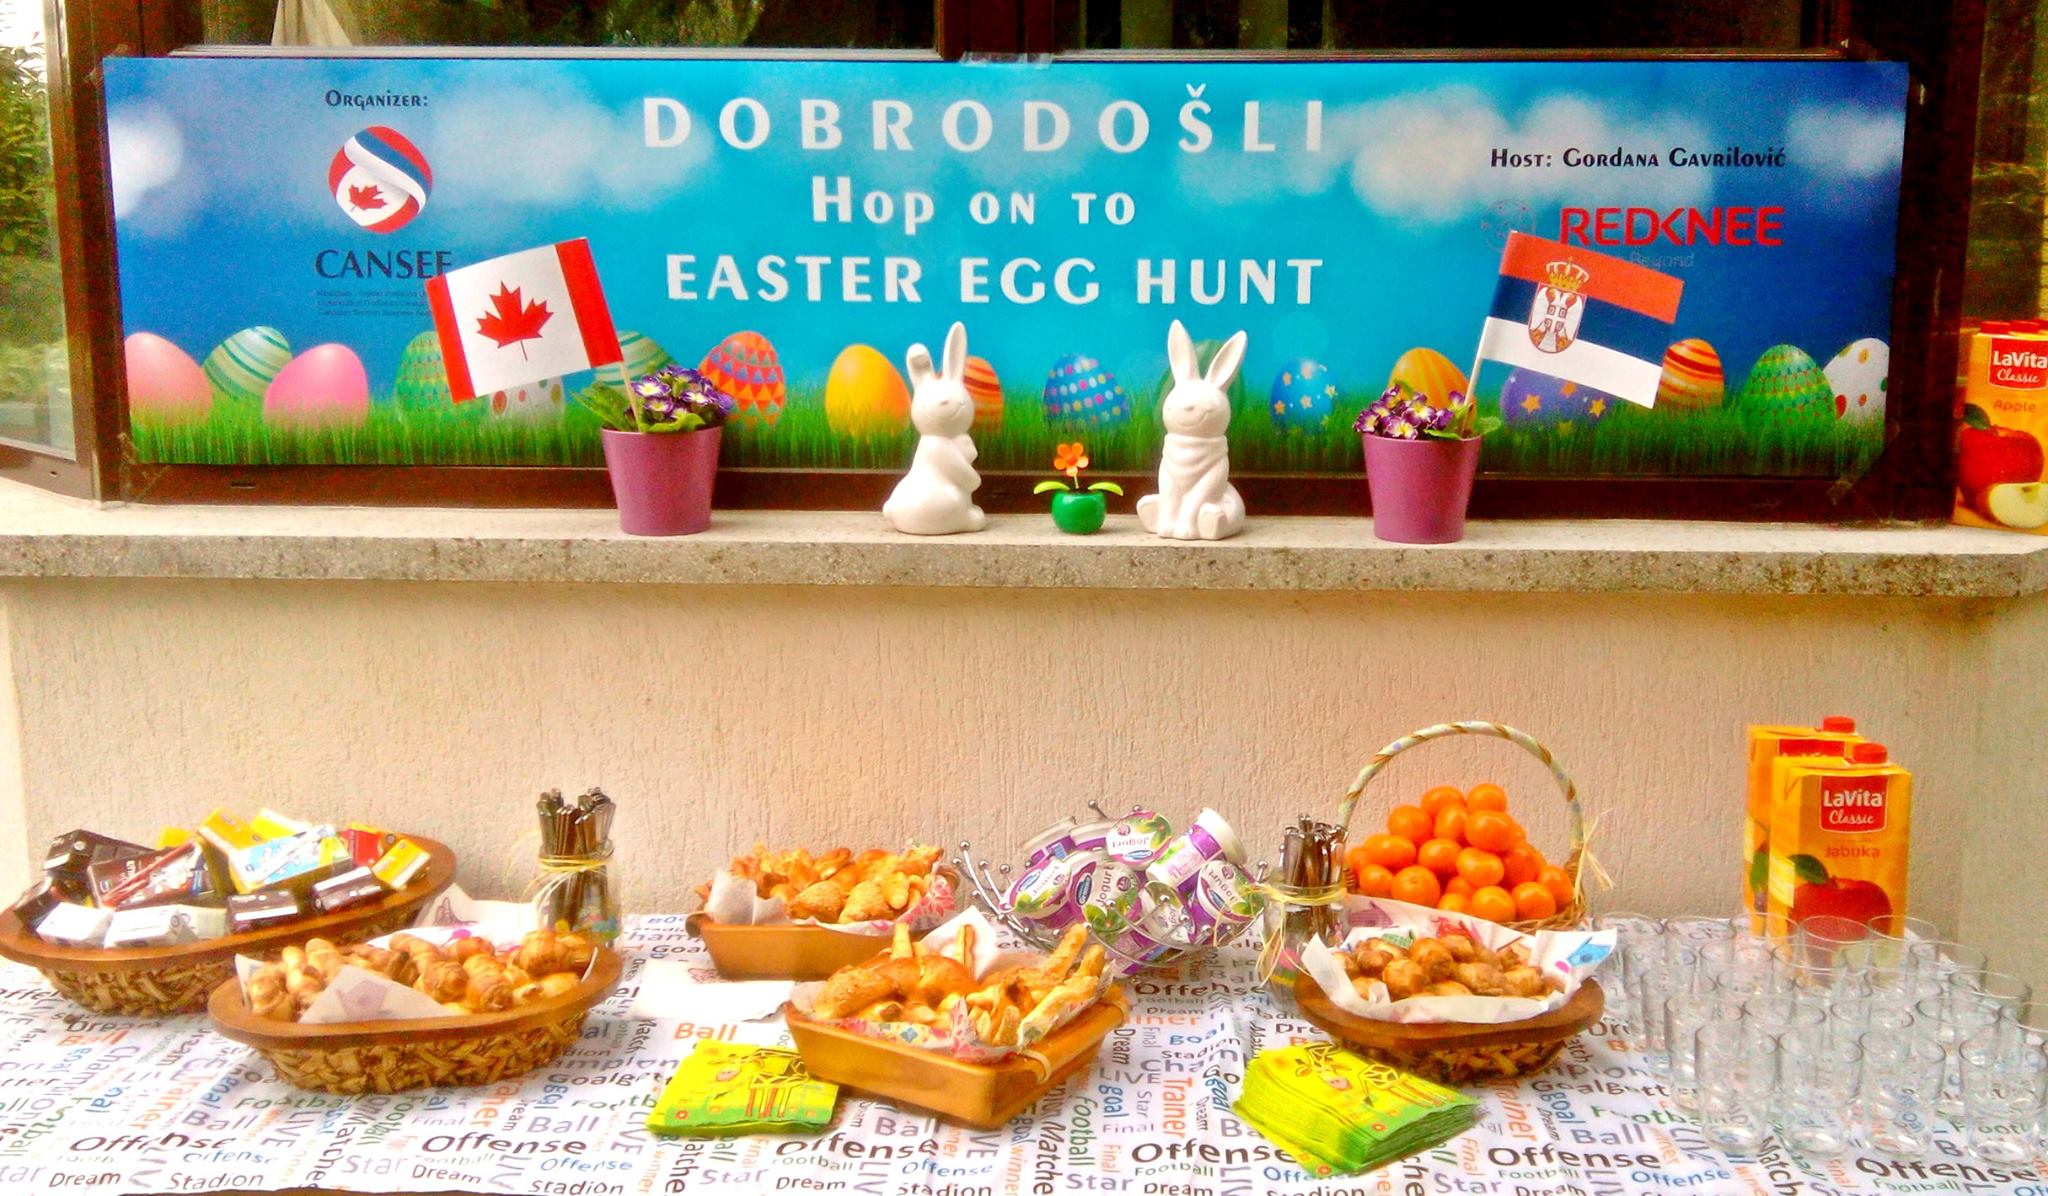 Easter Egg Hunt for CANSEE kids